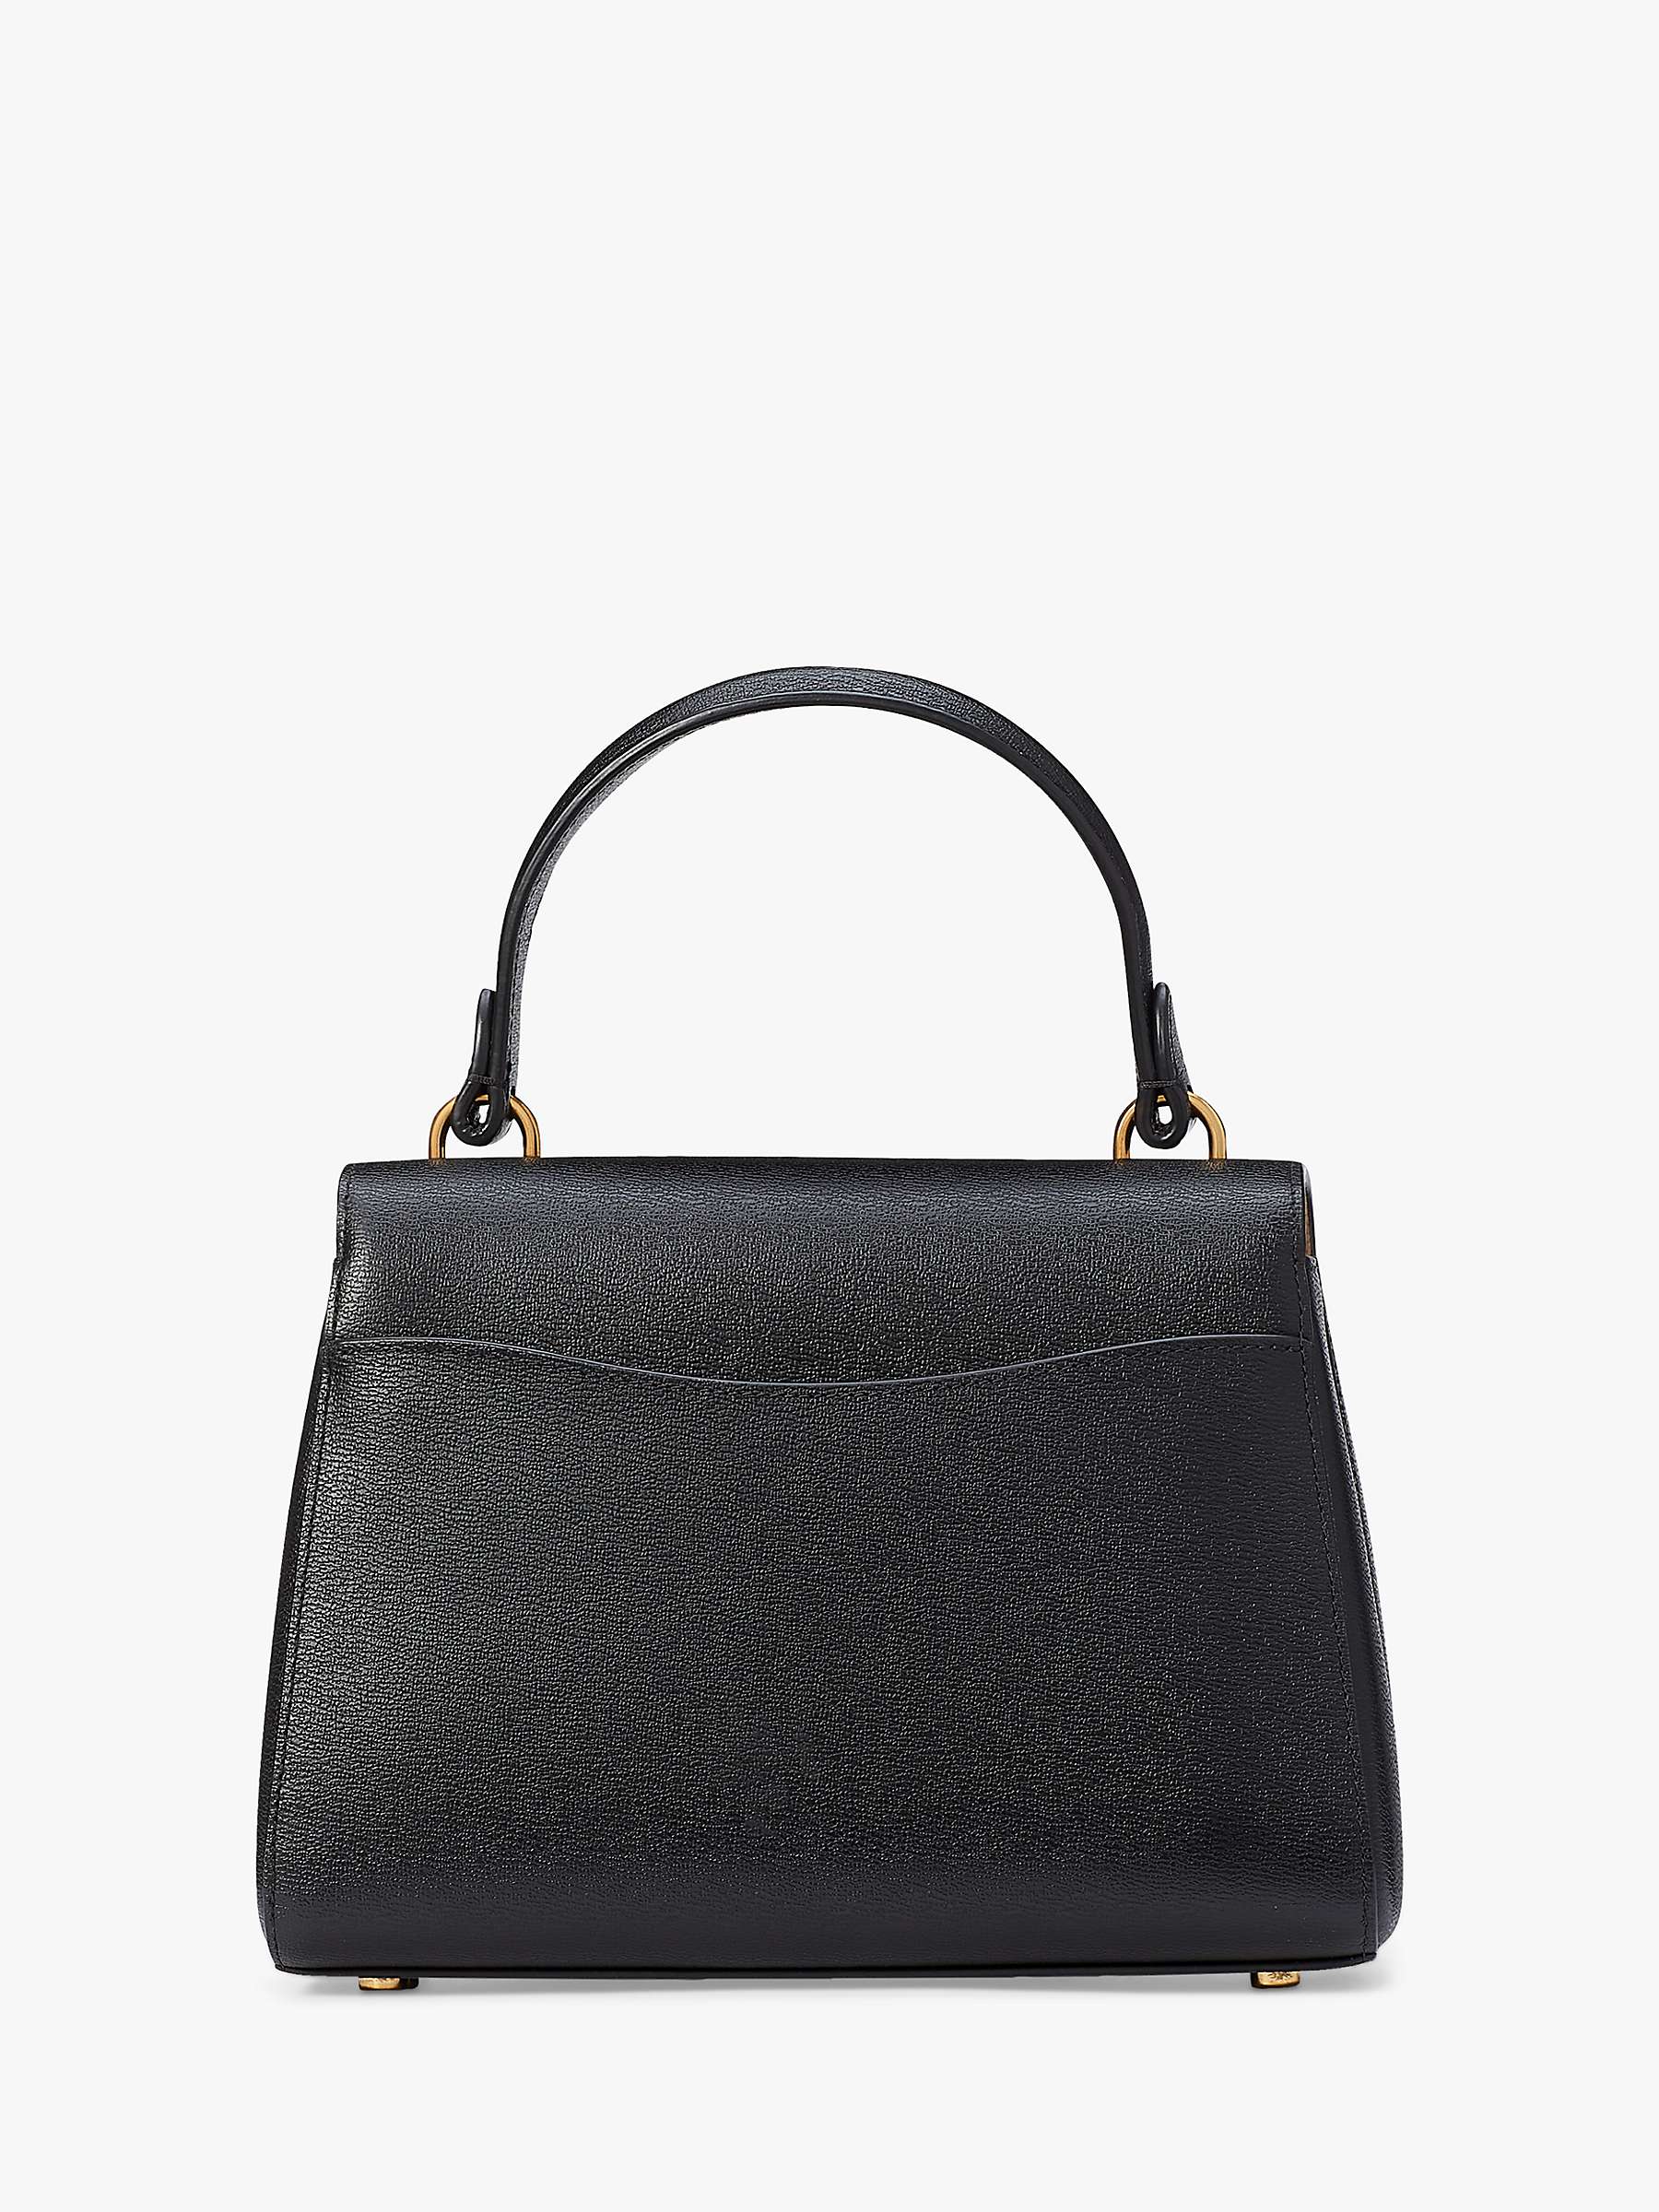 Buy kate spade new york Katie Leather Top Handle Grab Bag Online at johnlewis.com